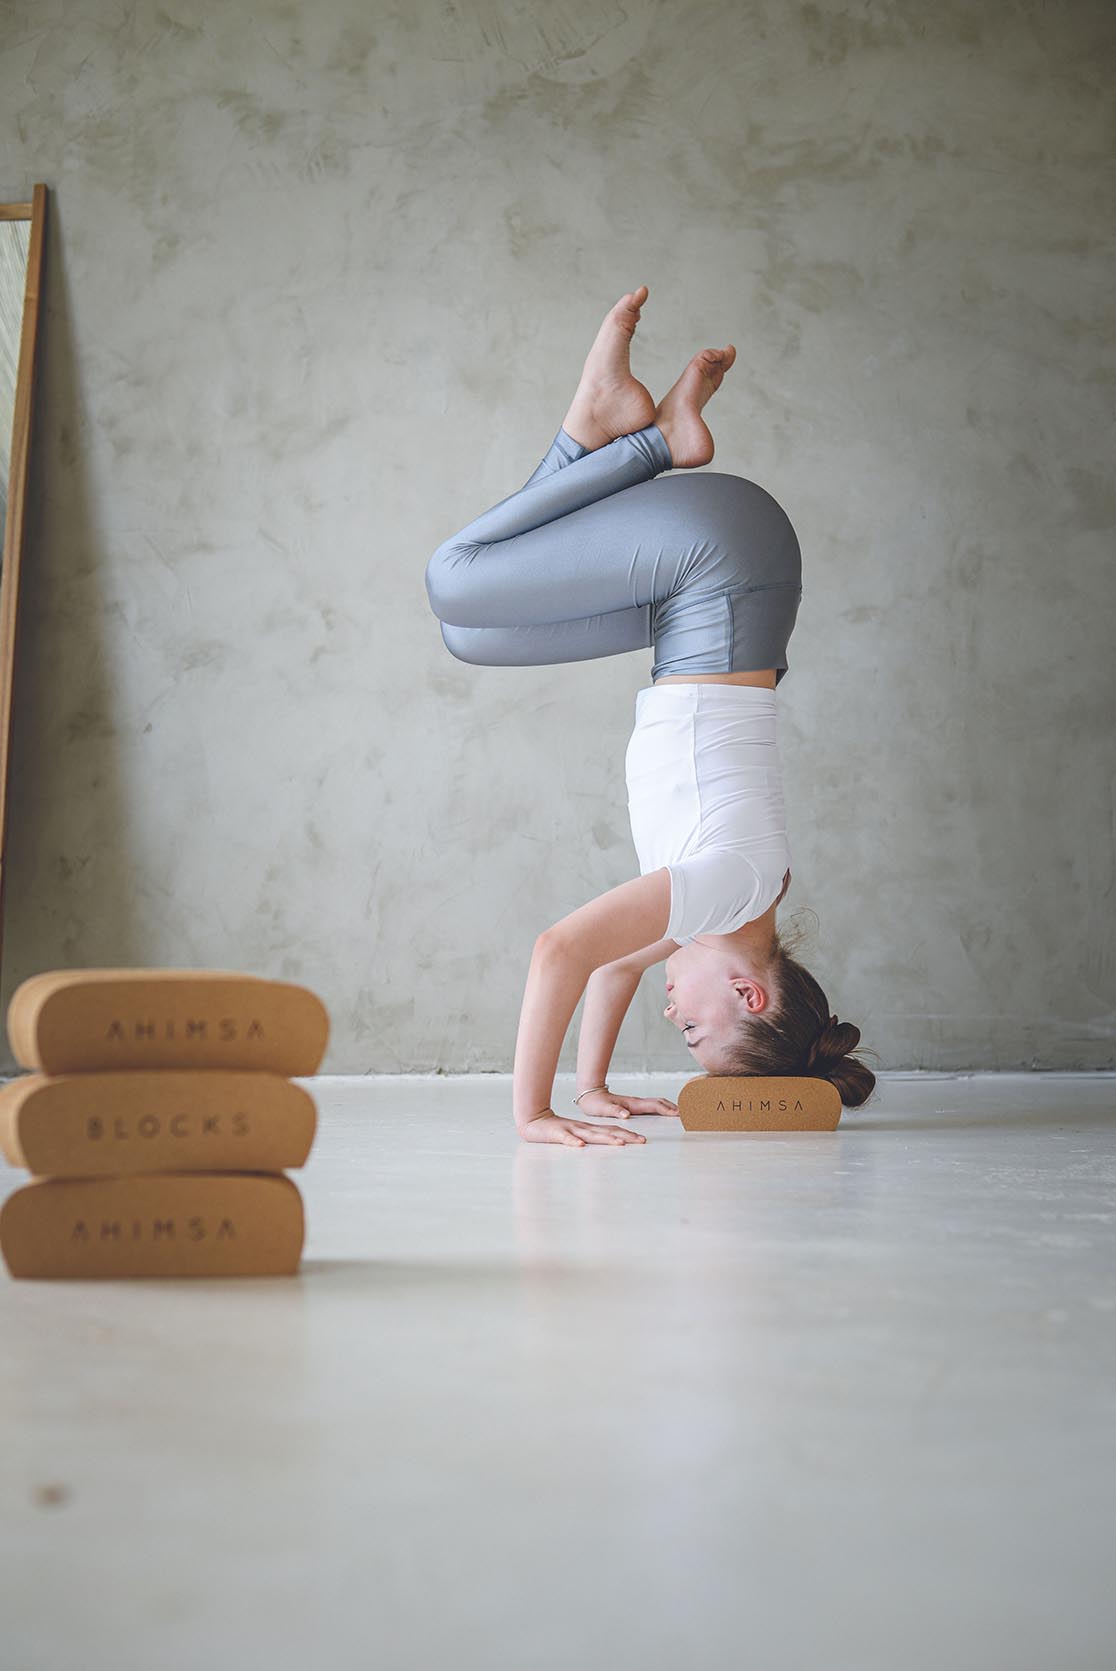 Amazon.com : 2PCS Yoga Block, Lightweight High Density Foam Exercise Blocks  Weight Blocks for Yoga Pilates Meditation Pink : Sports & Outdoors